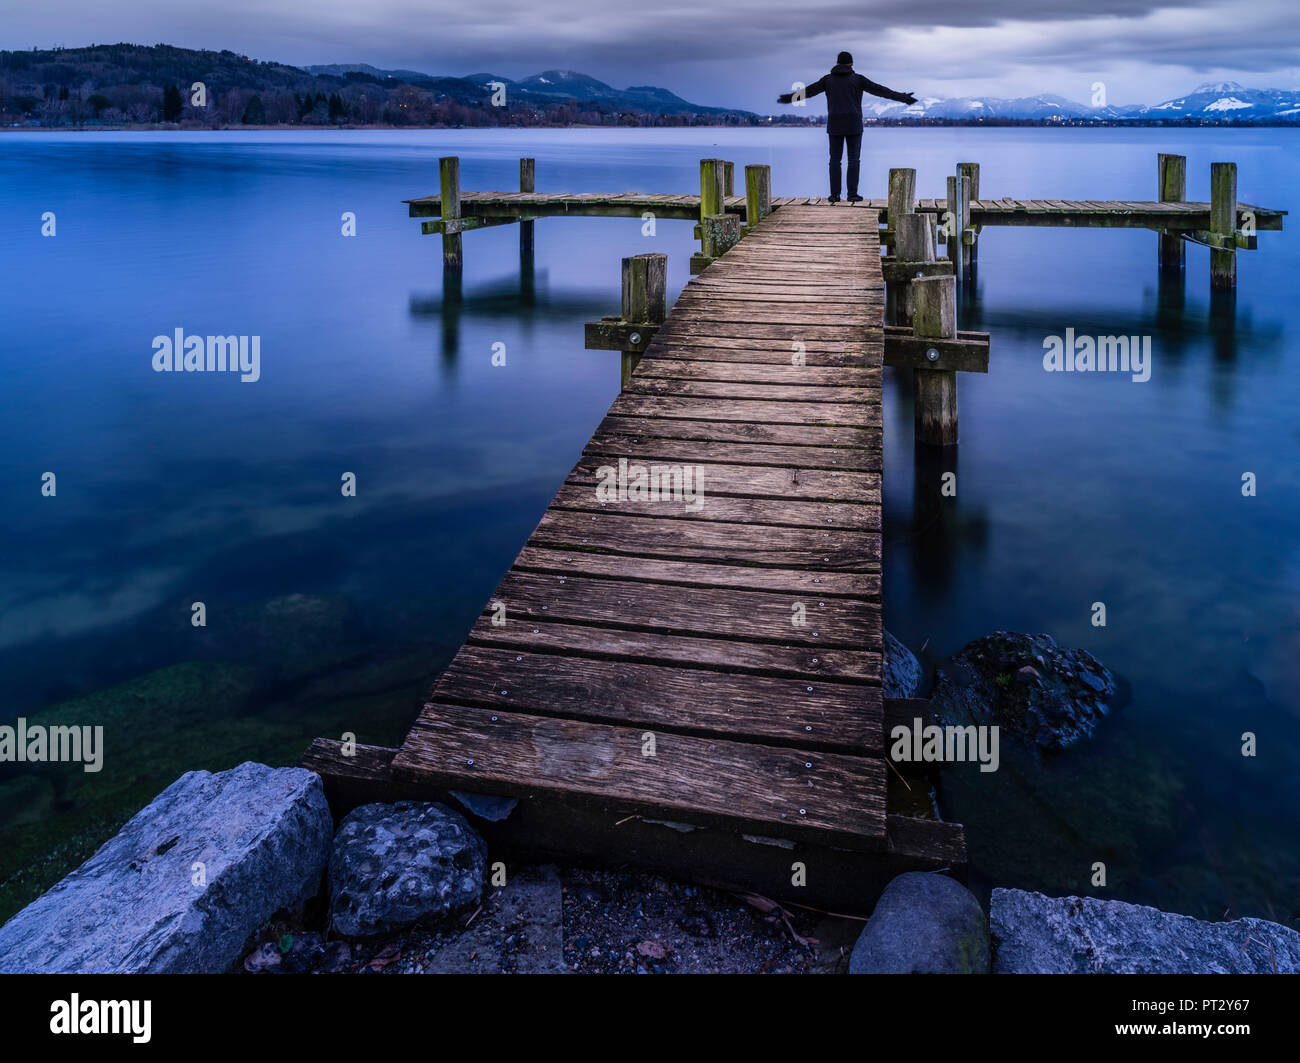 Meditative mood on the lake shore, man on jetty Stock Photo